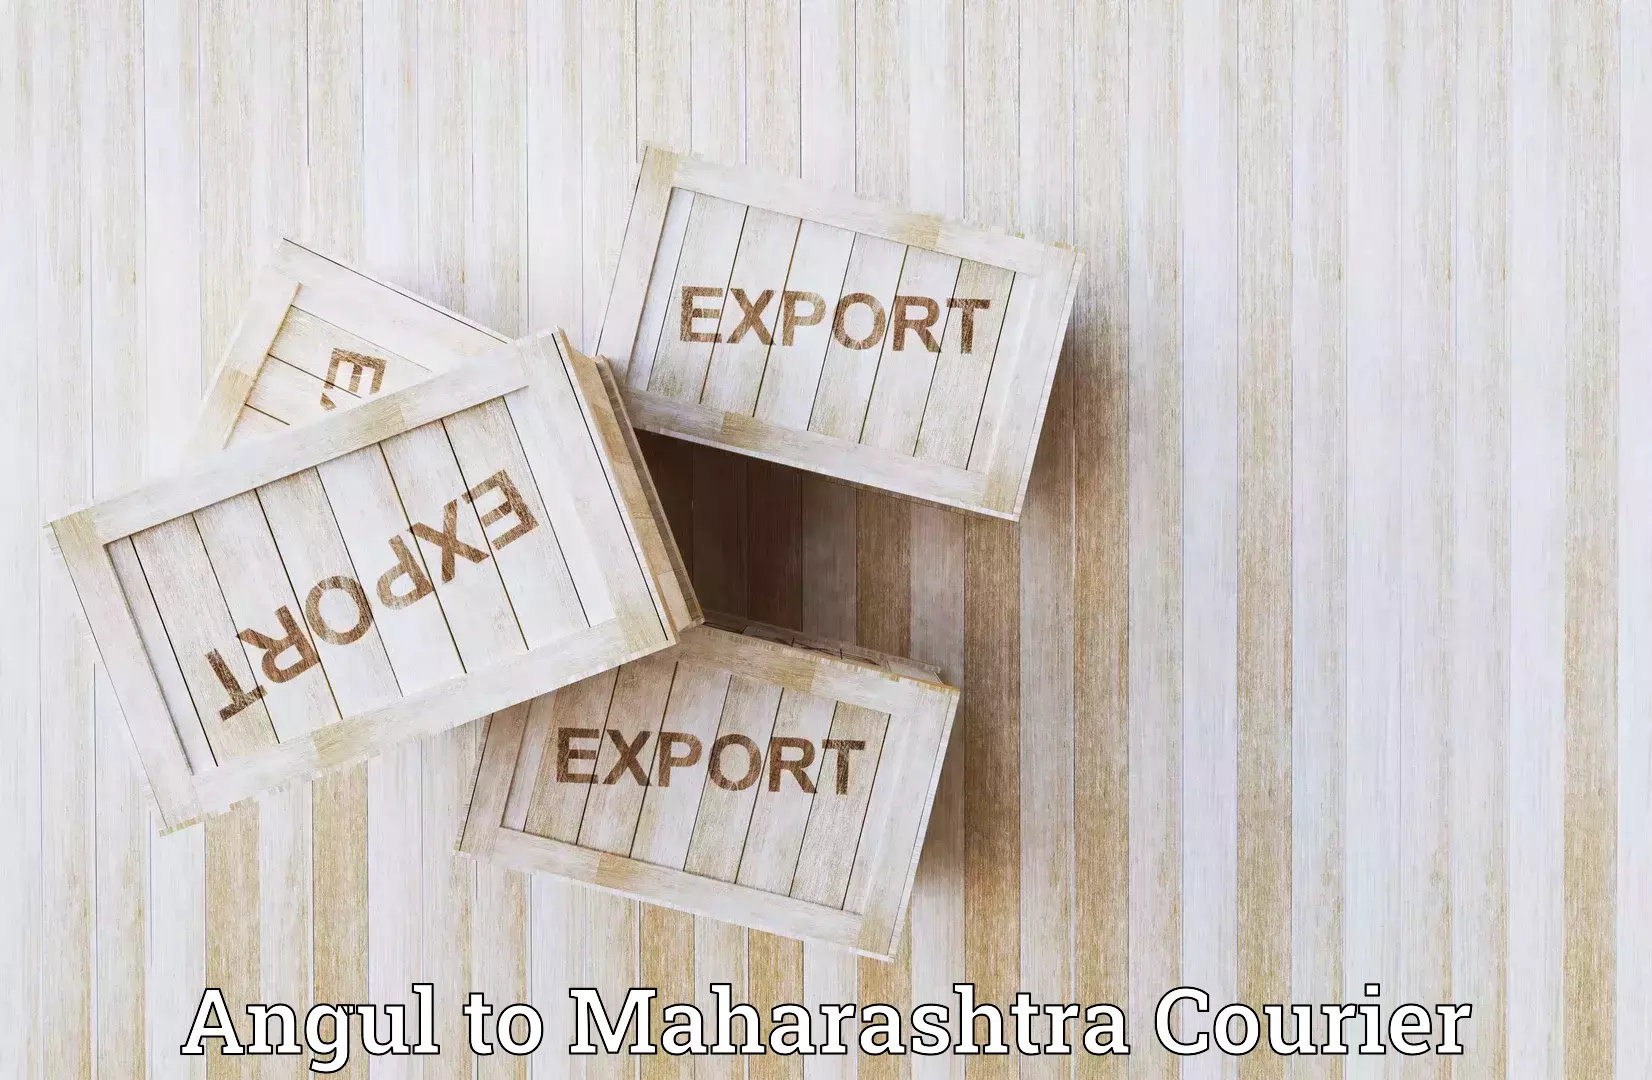 International courier networks Angul to Maharashtra